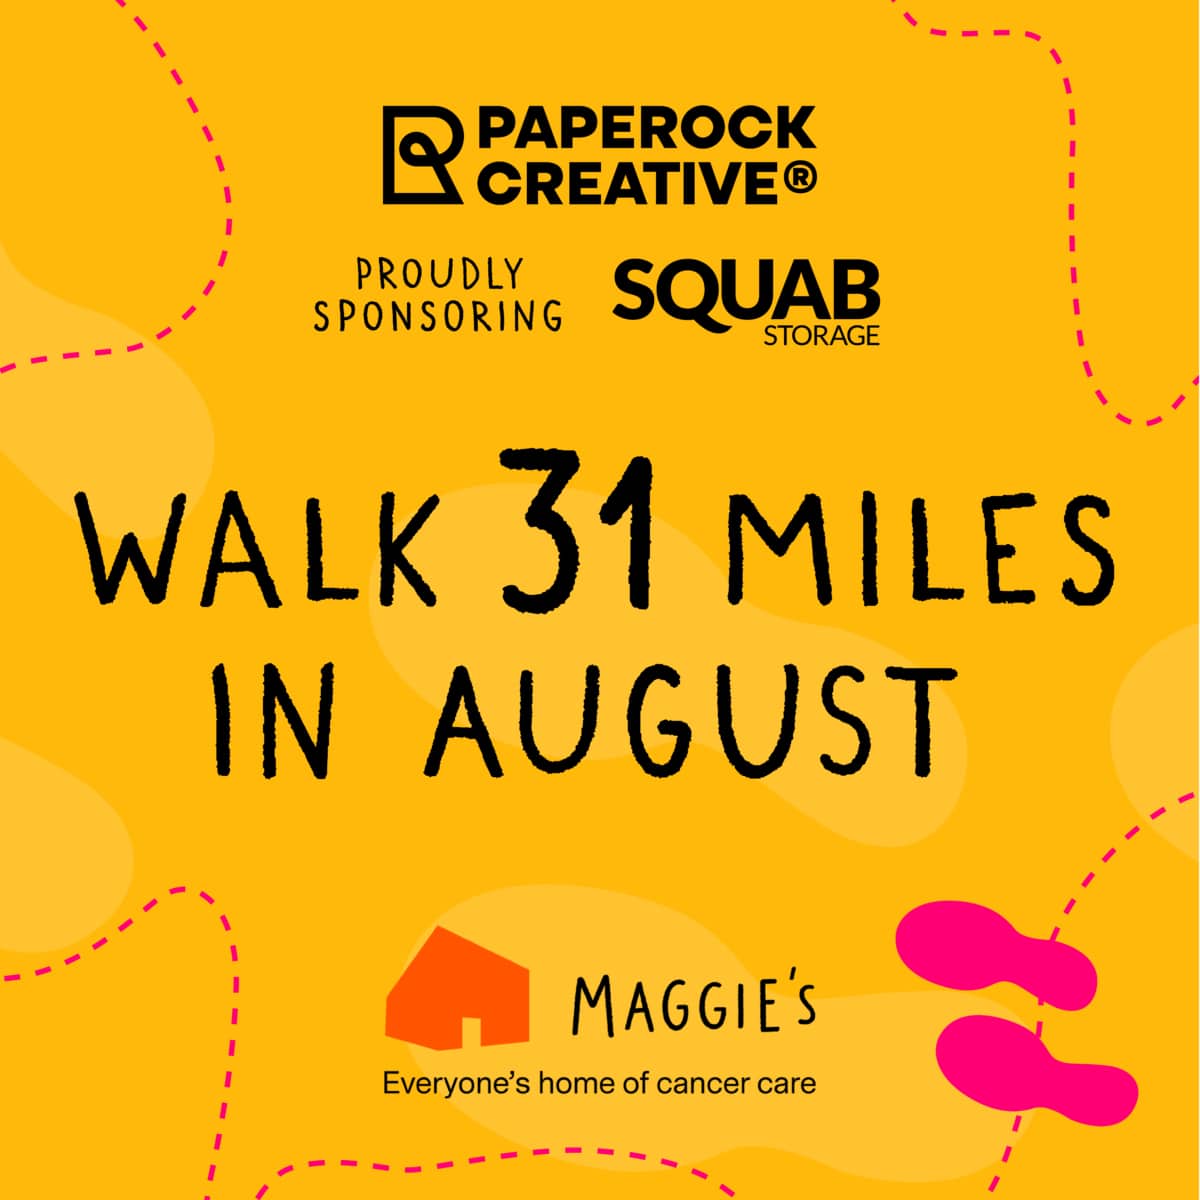 Sponsoring The Squab Storage Team's Charity Walk